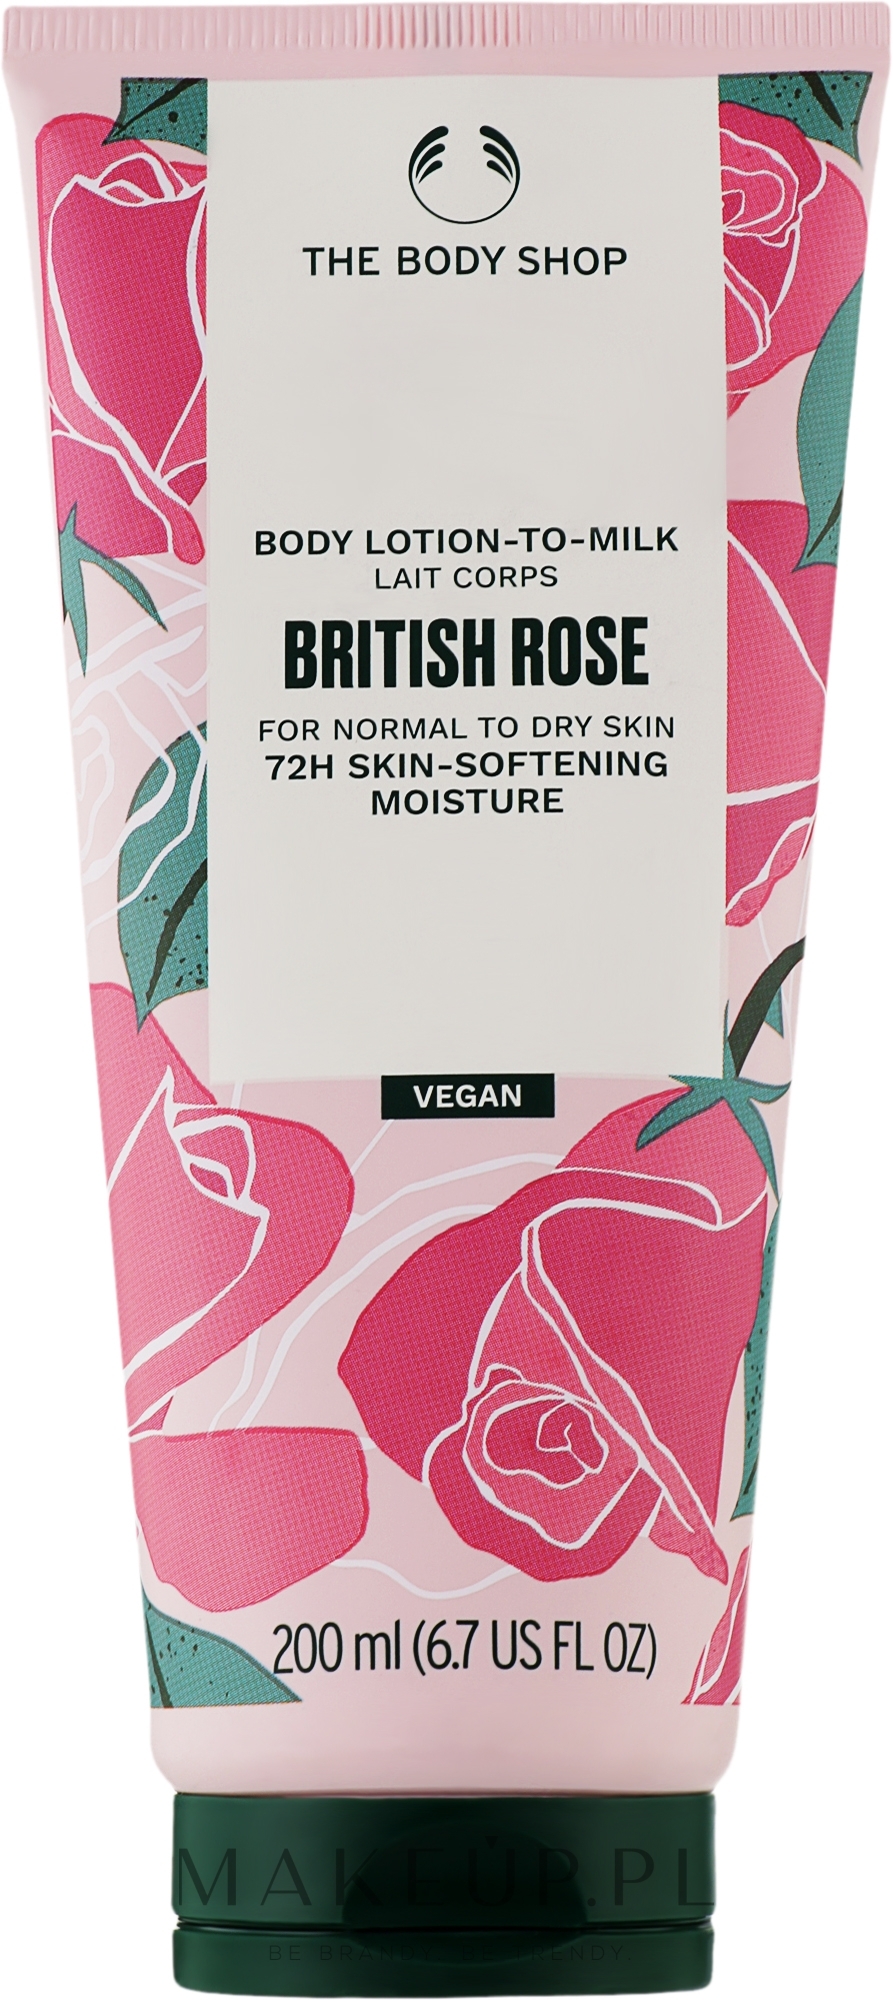 Balsam do ciała - The Body Shop British Rose 72h Skin Softening Moisturiser Body Lotion-to-Milk — Zdjęcie 200 ml